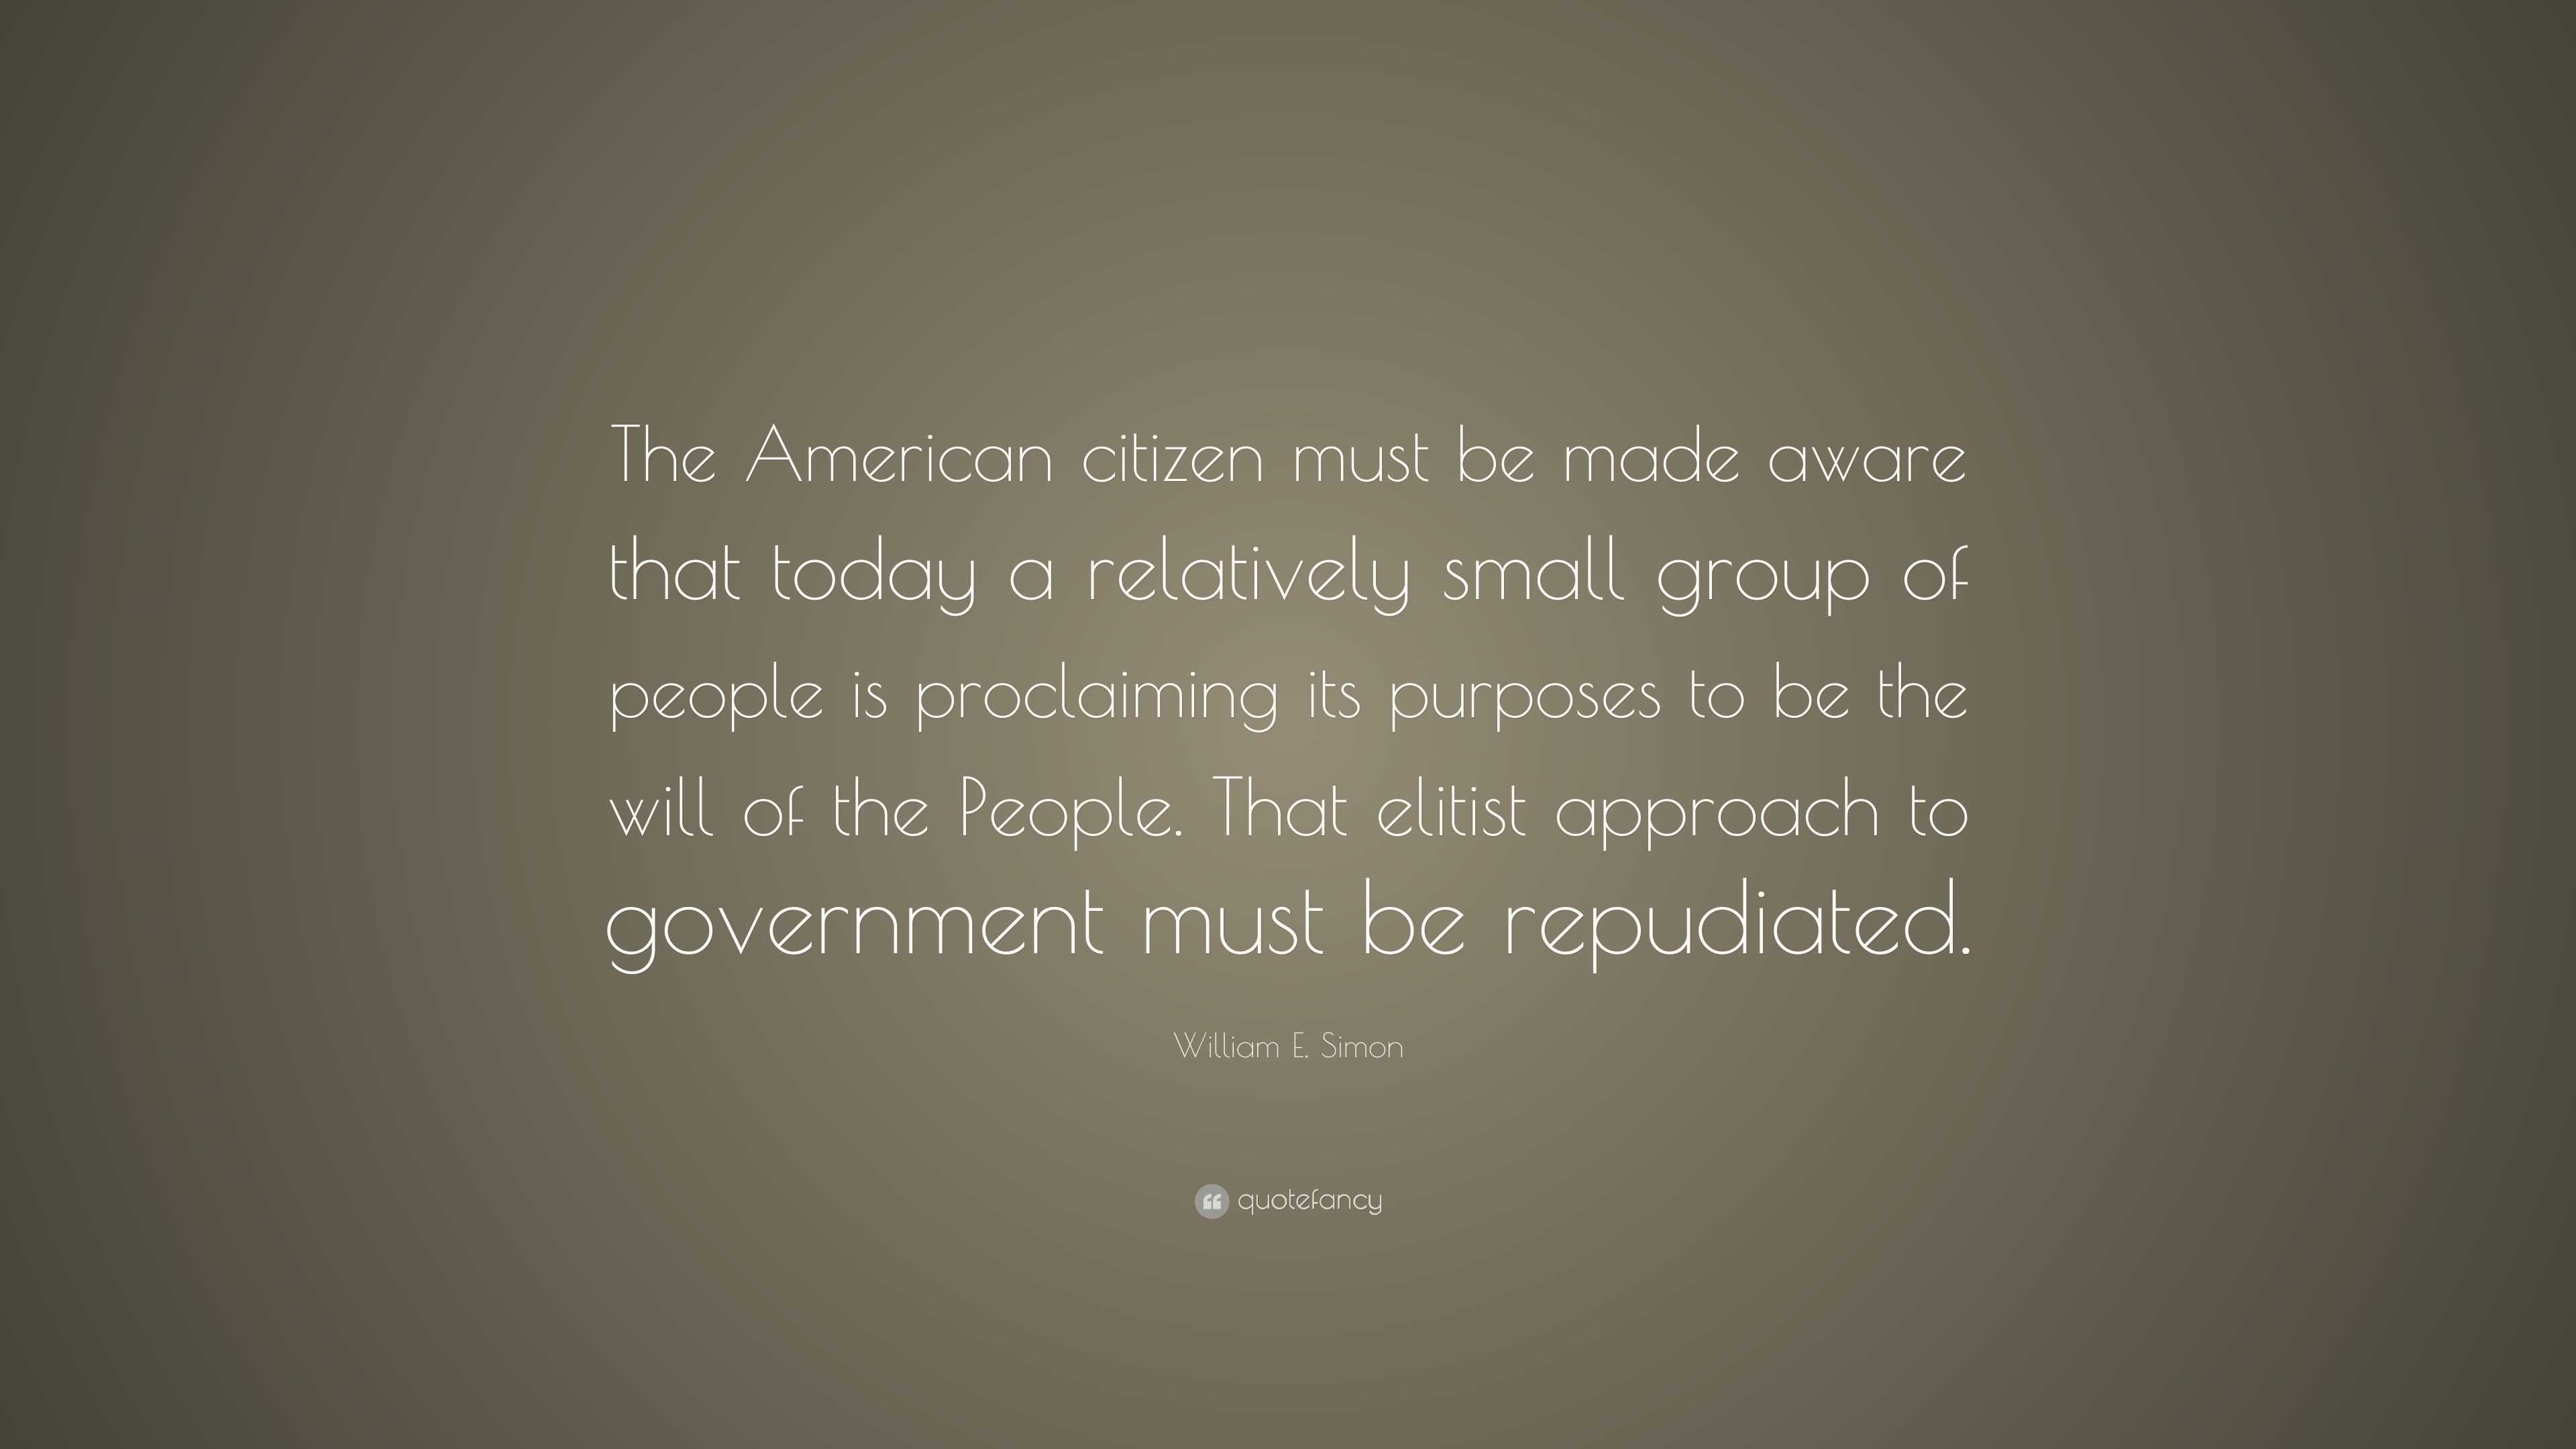 William E. Simon Quote: “The American citizen must be made aware that ...